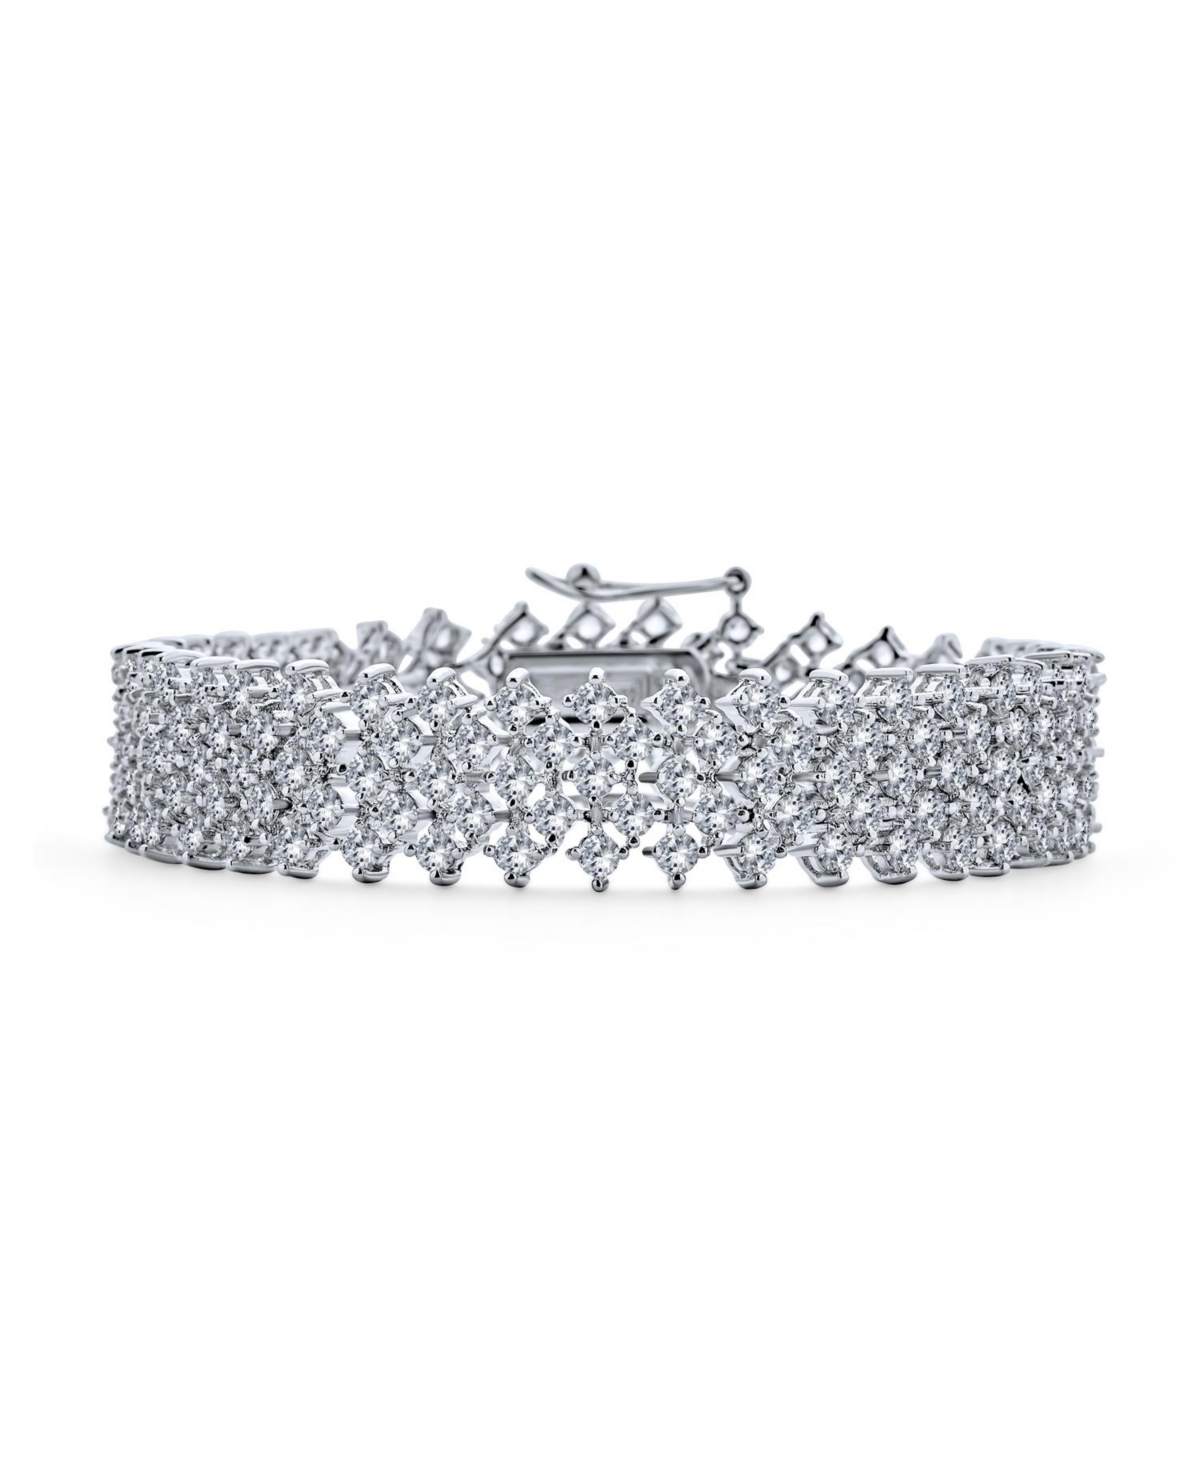 Elegant Bridal Wide Aaa Cz Statement Bracelet Rhodium Plated for Women, Prom, Wedding Formal Wear Multi Row Lattice Design - Clear